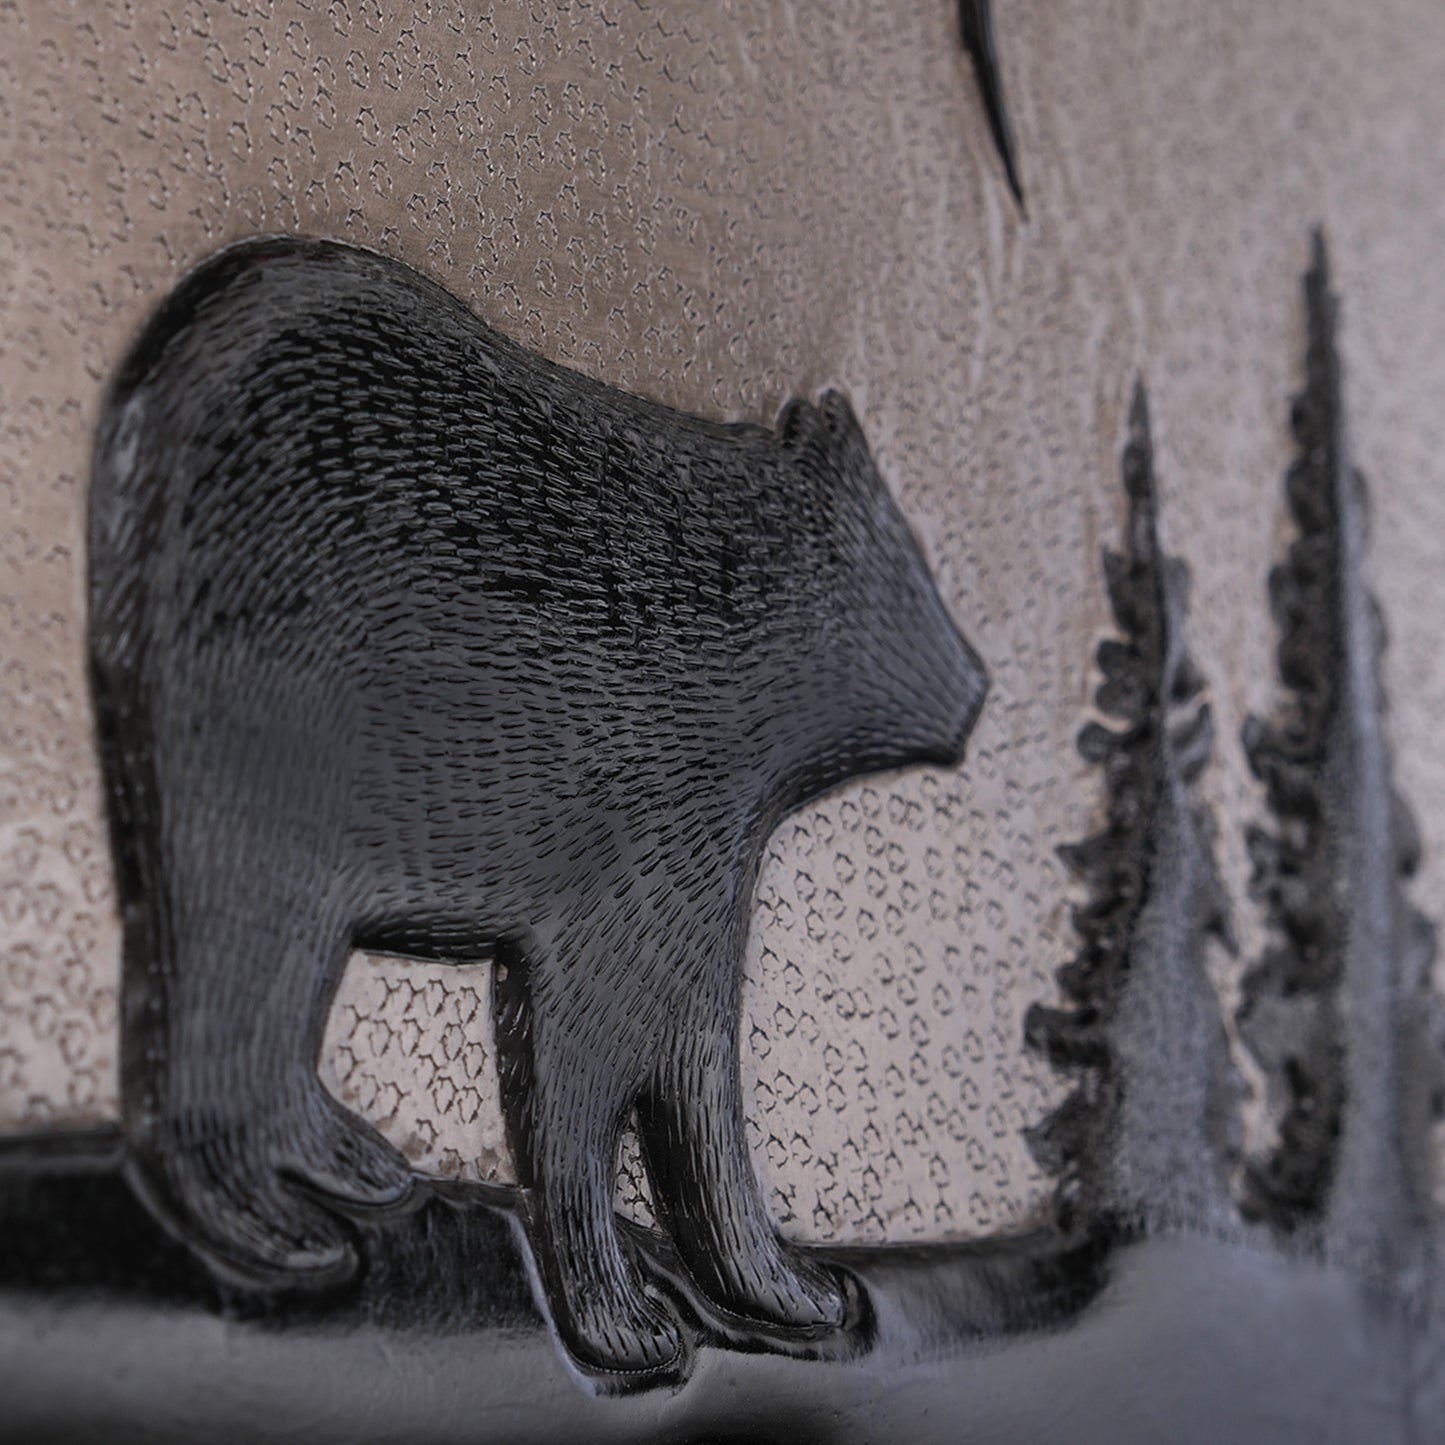 Bear Scene Kitchen Backsplash Tile - 18"x24" Gray&Black